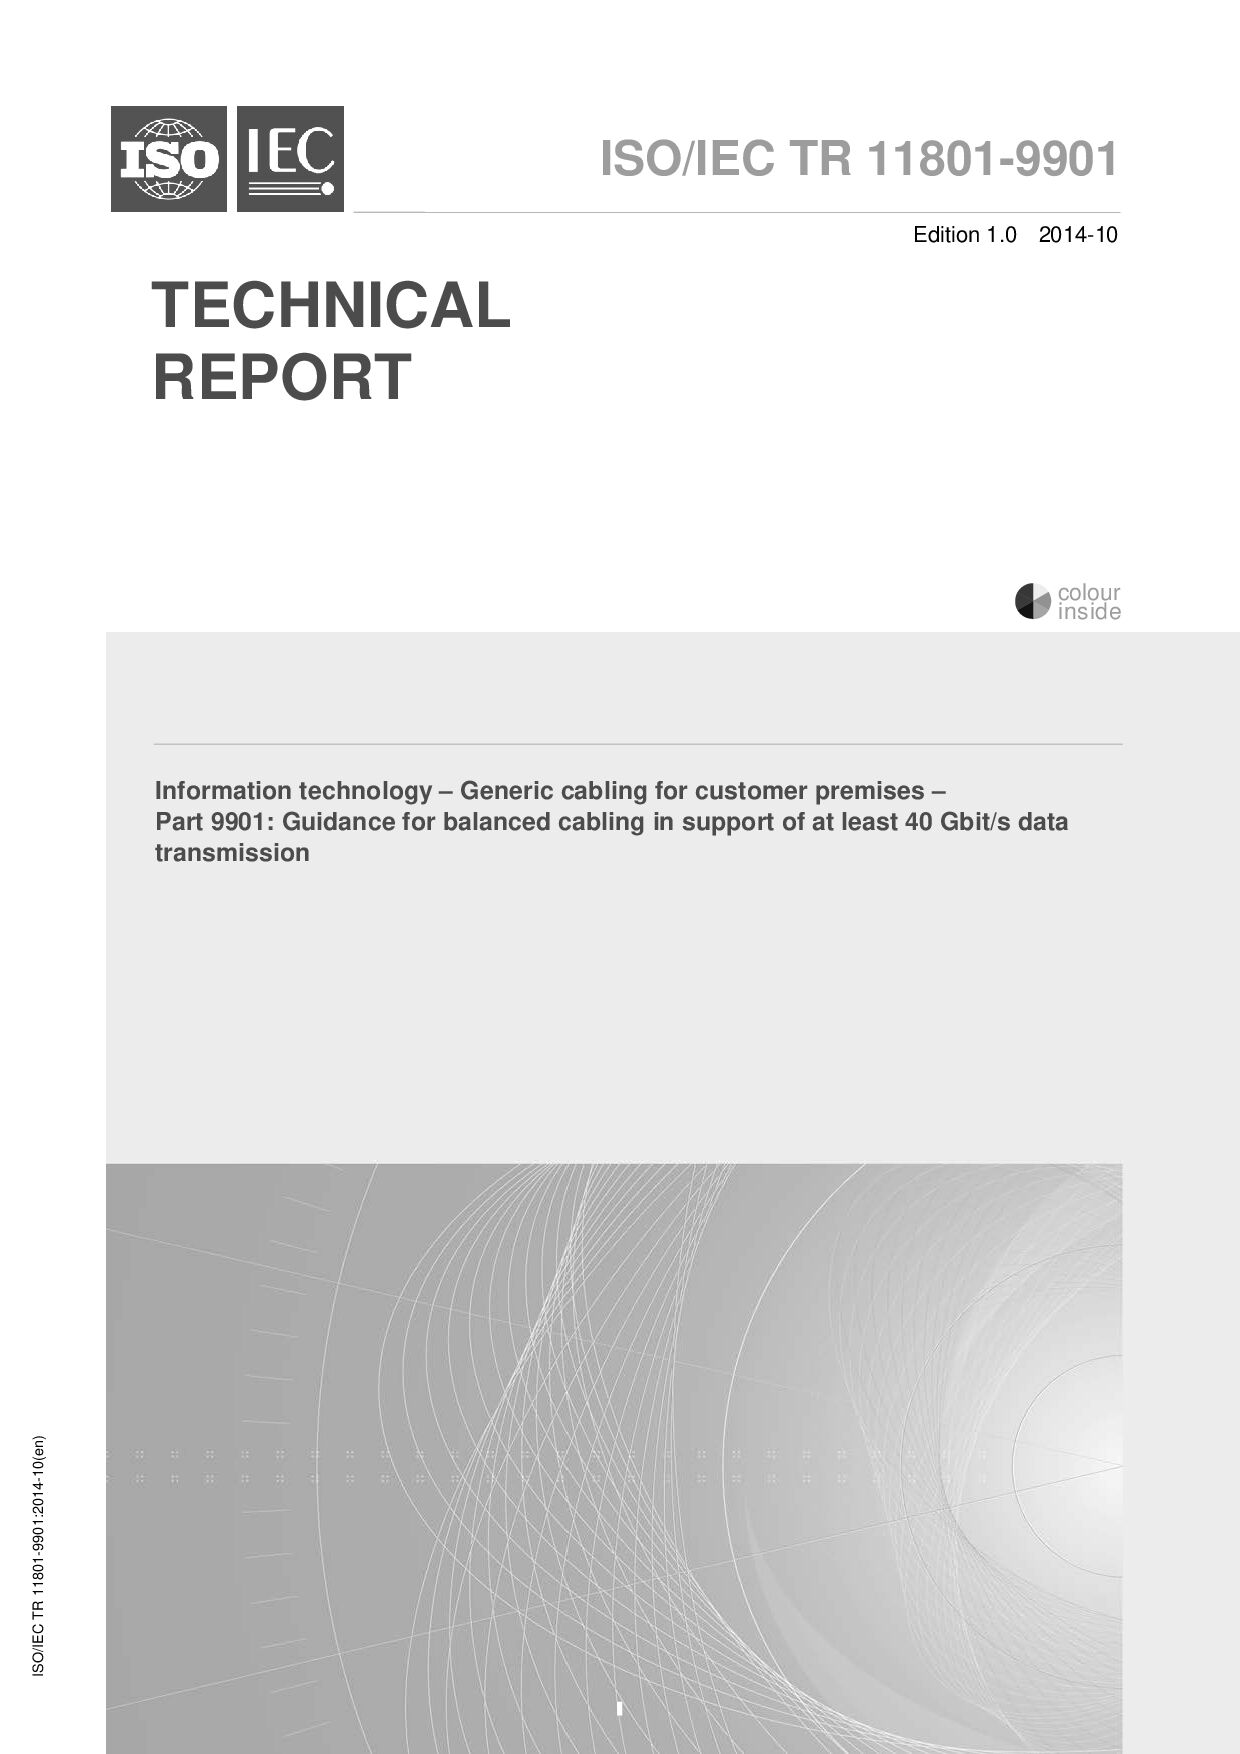 ISO/IEC TR 11801-9901:2014